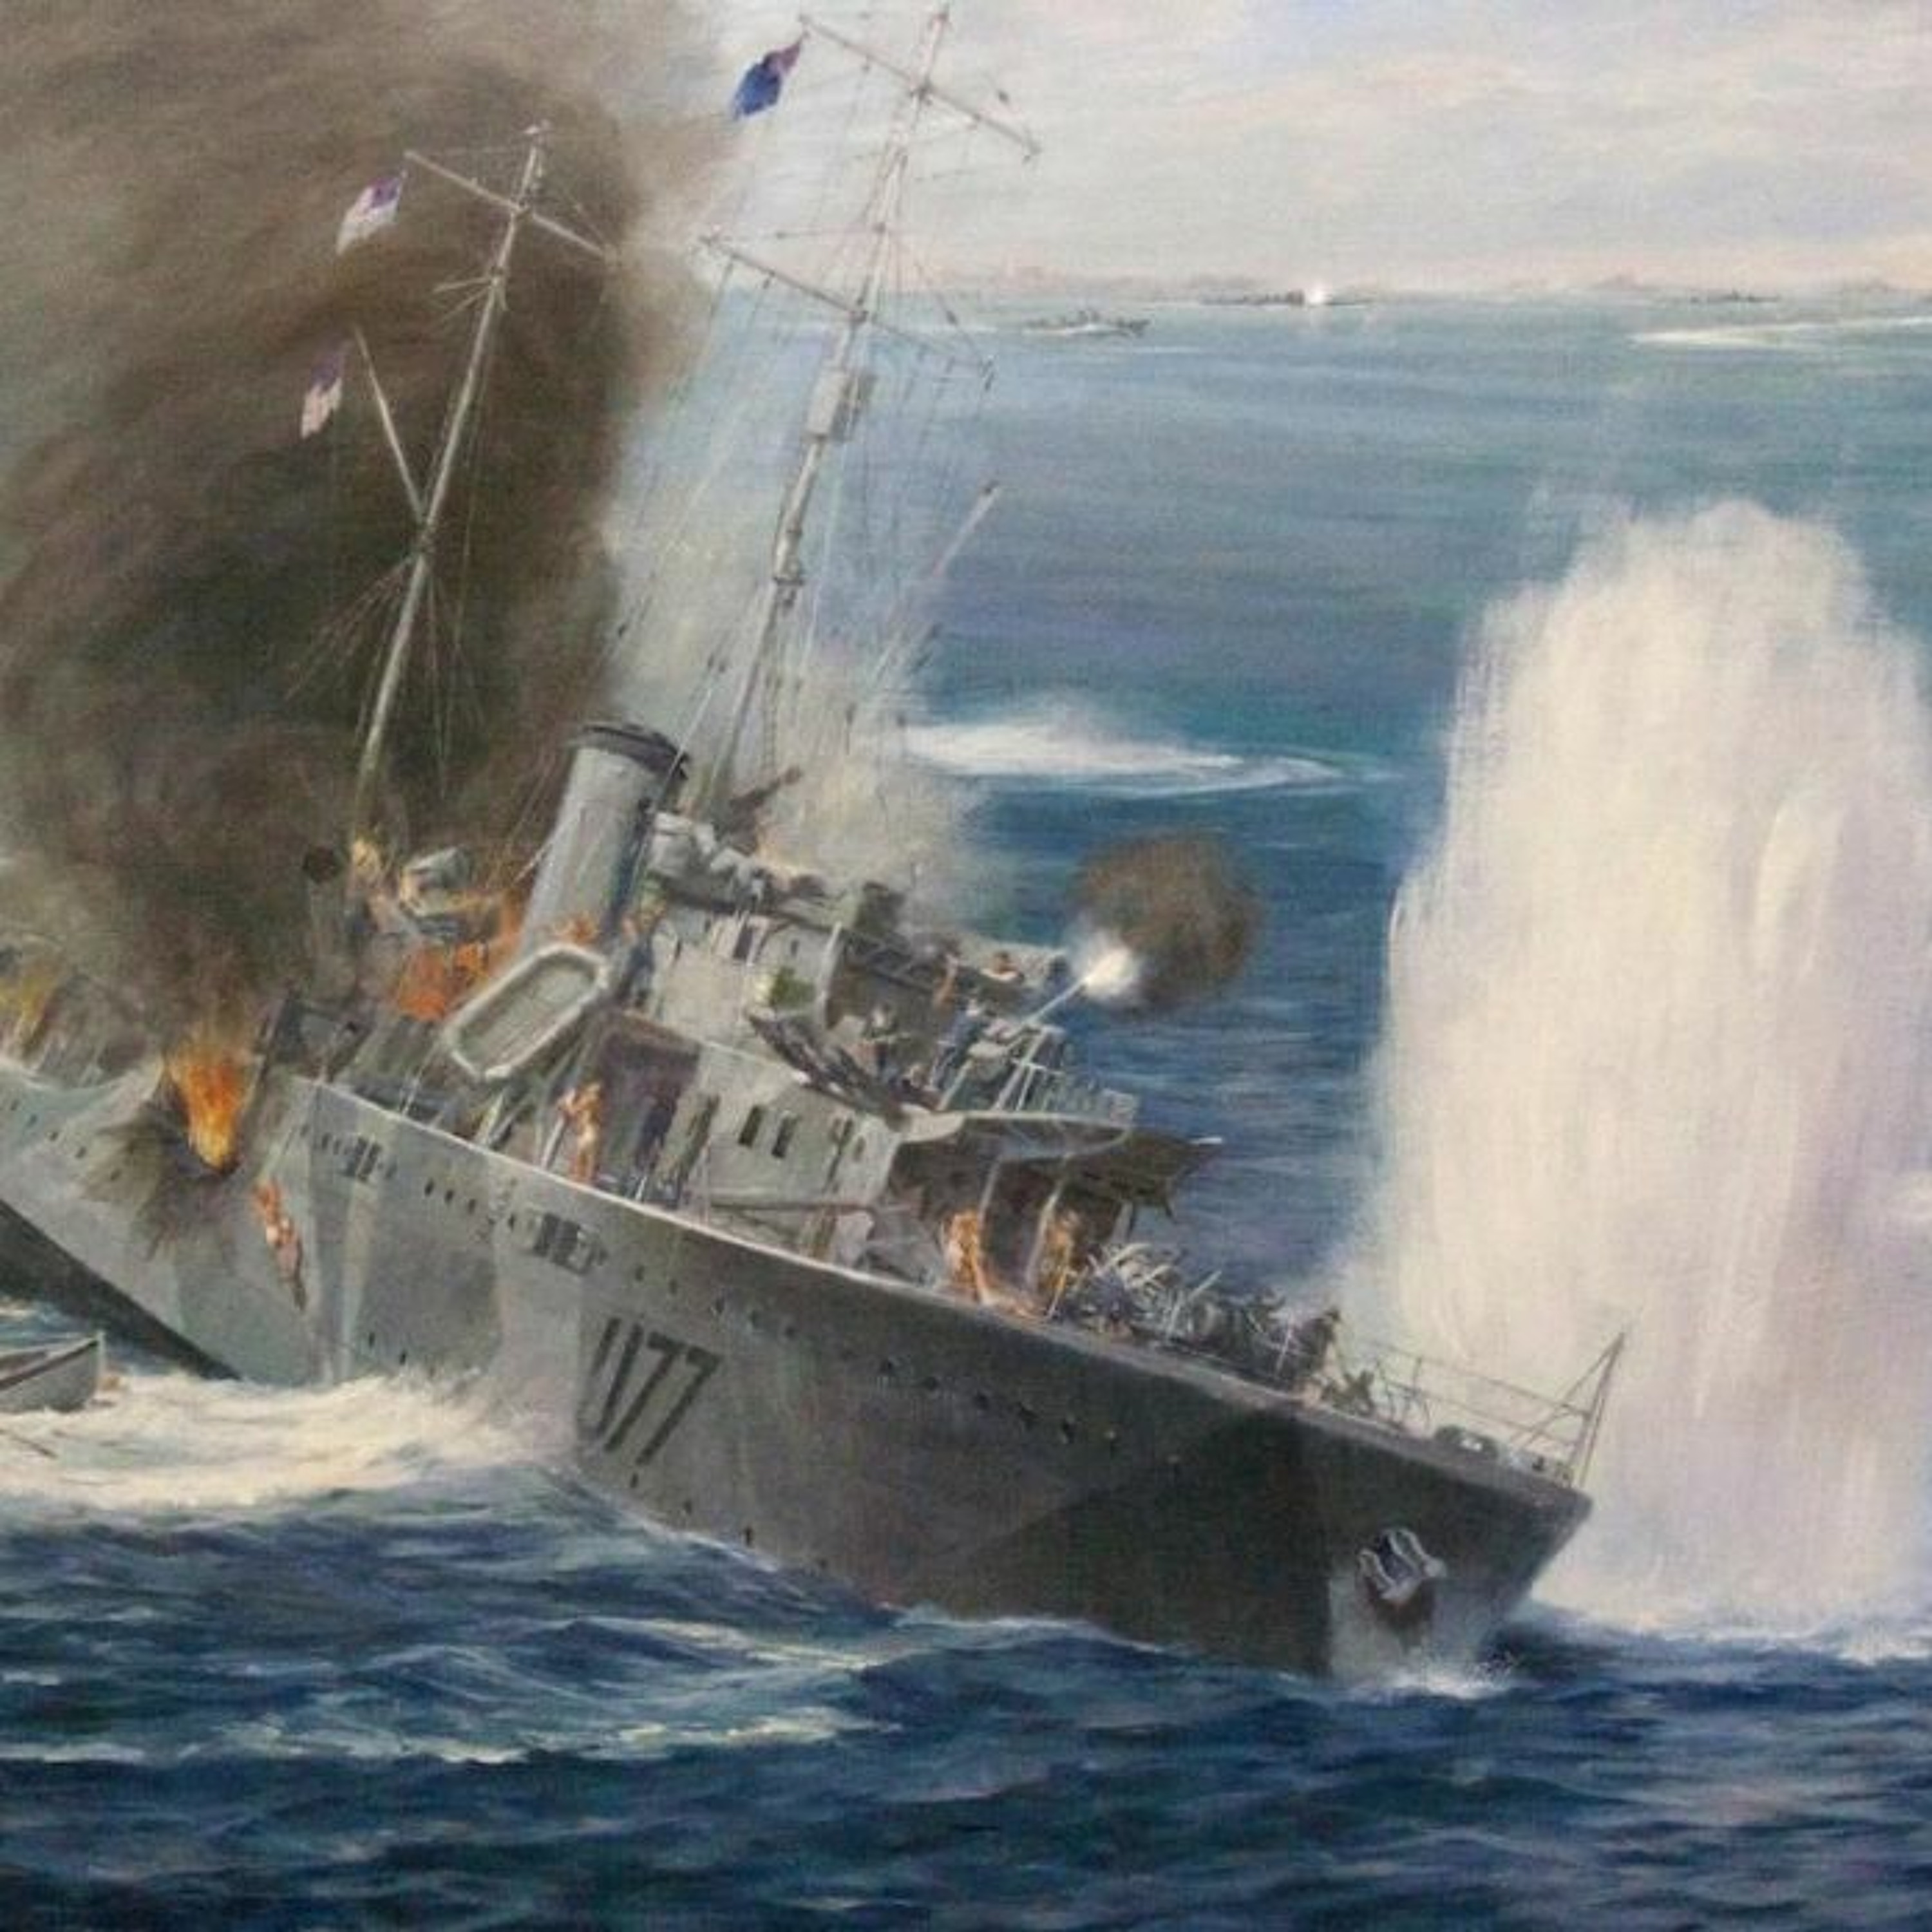 S7E06 - Defending Convoys Part 2:  The heroism of HMAS Yarra